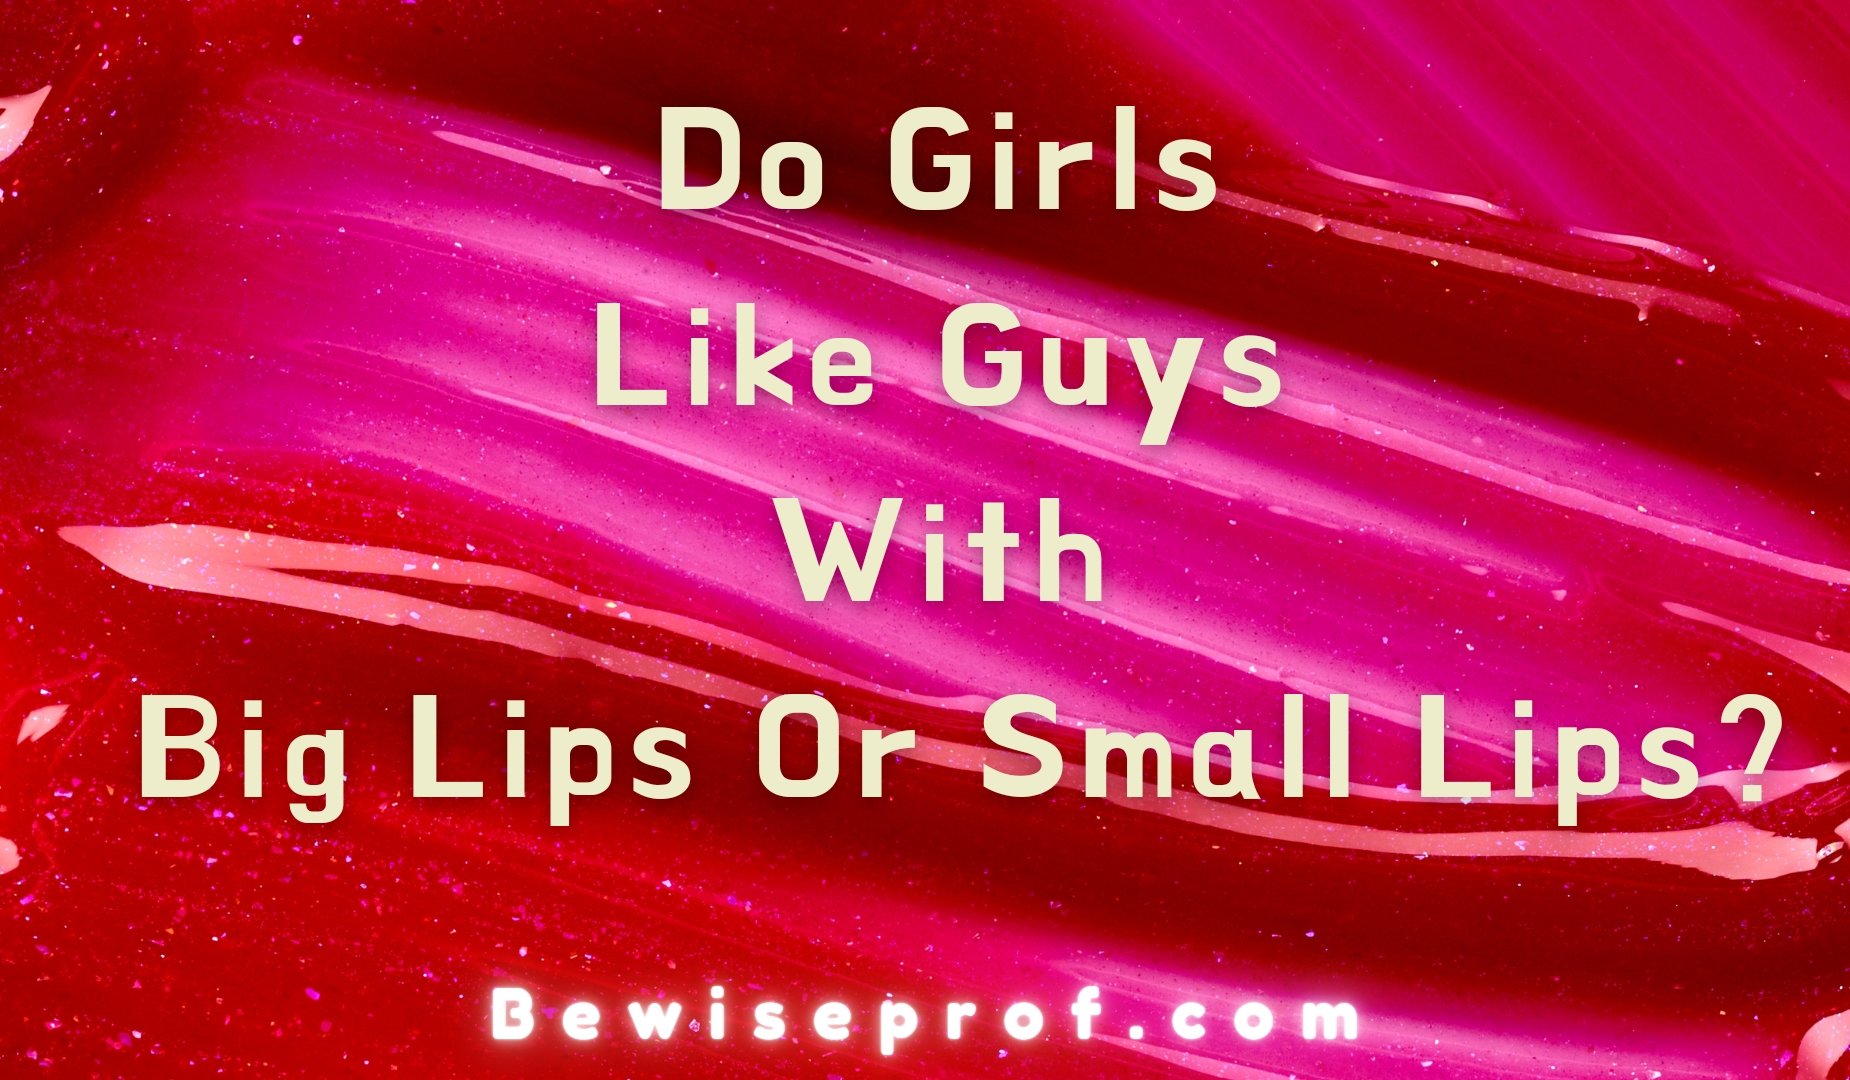 Do Girls Like Guys With Big Lips Or Small Lips?